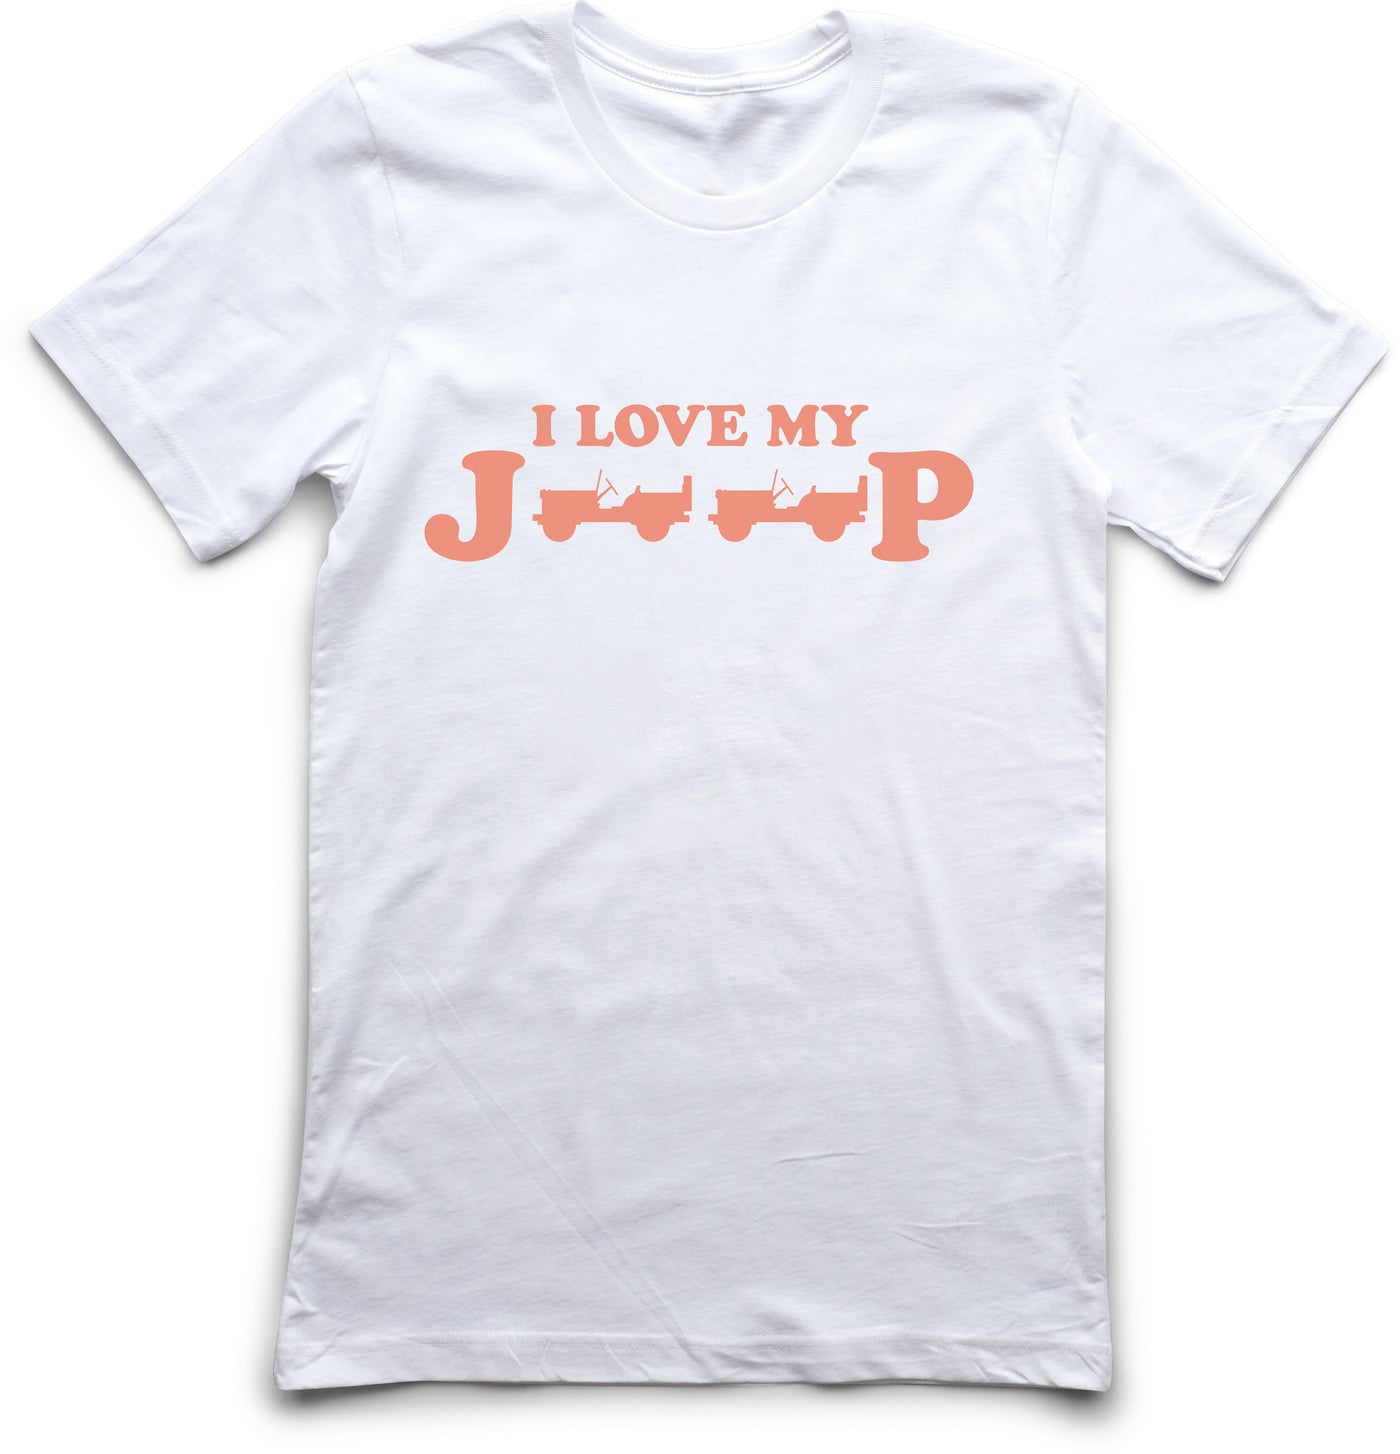 "I Love My Jeep" Short Sleeve Logo Tee